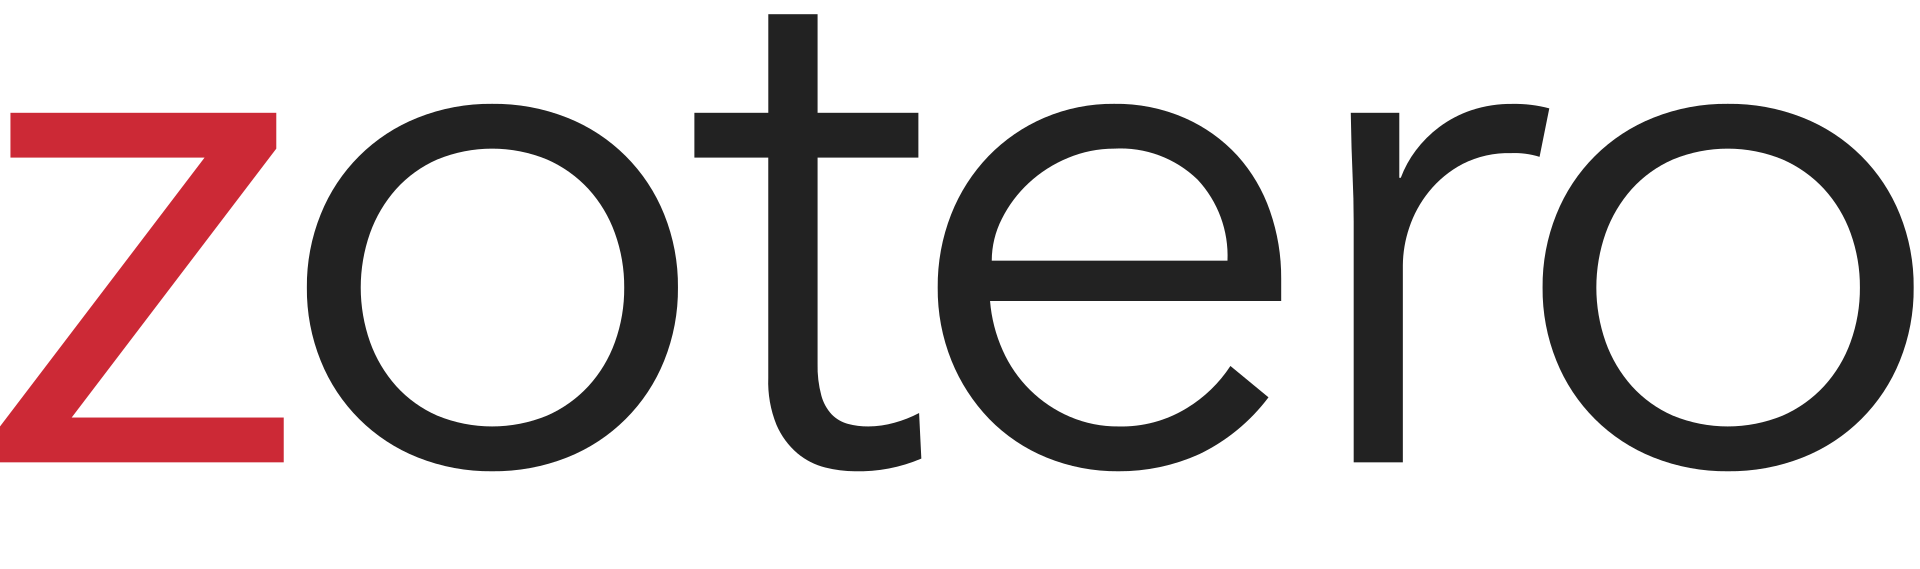 Zotero's Logo